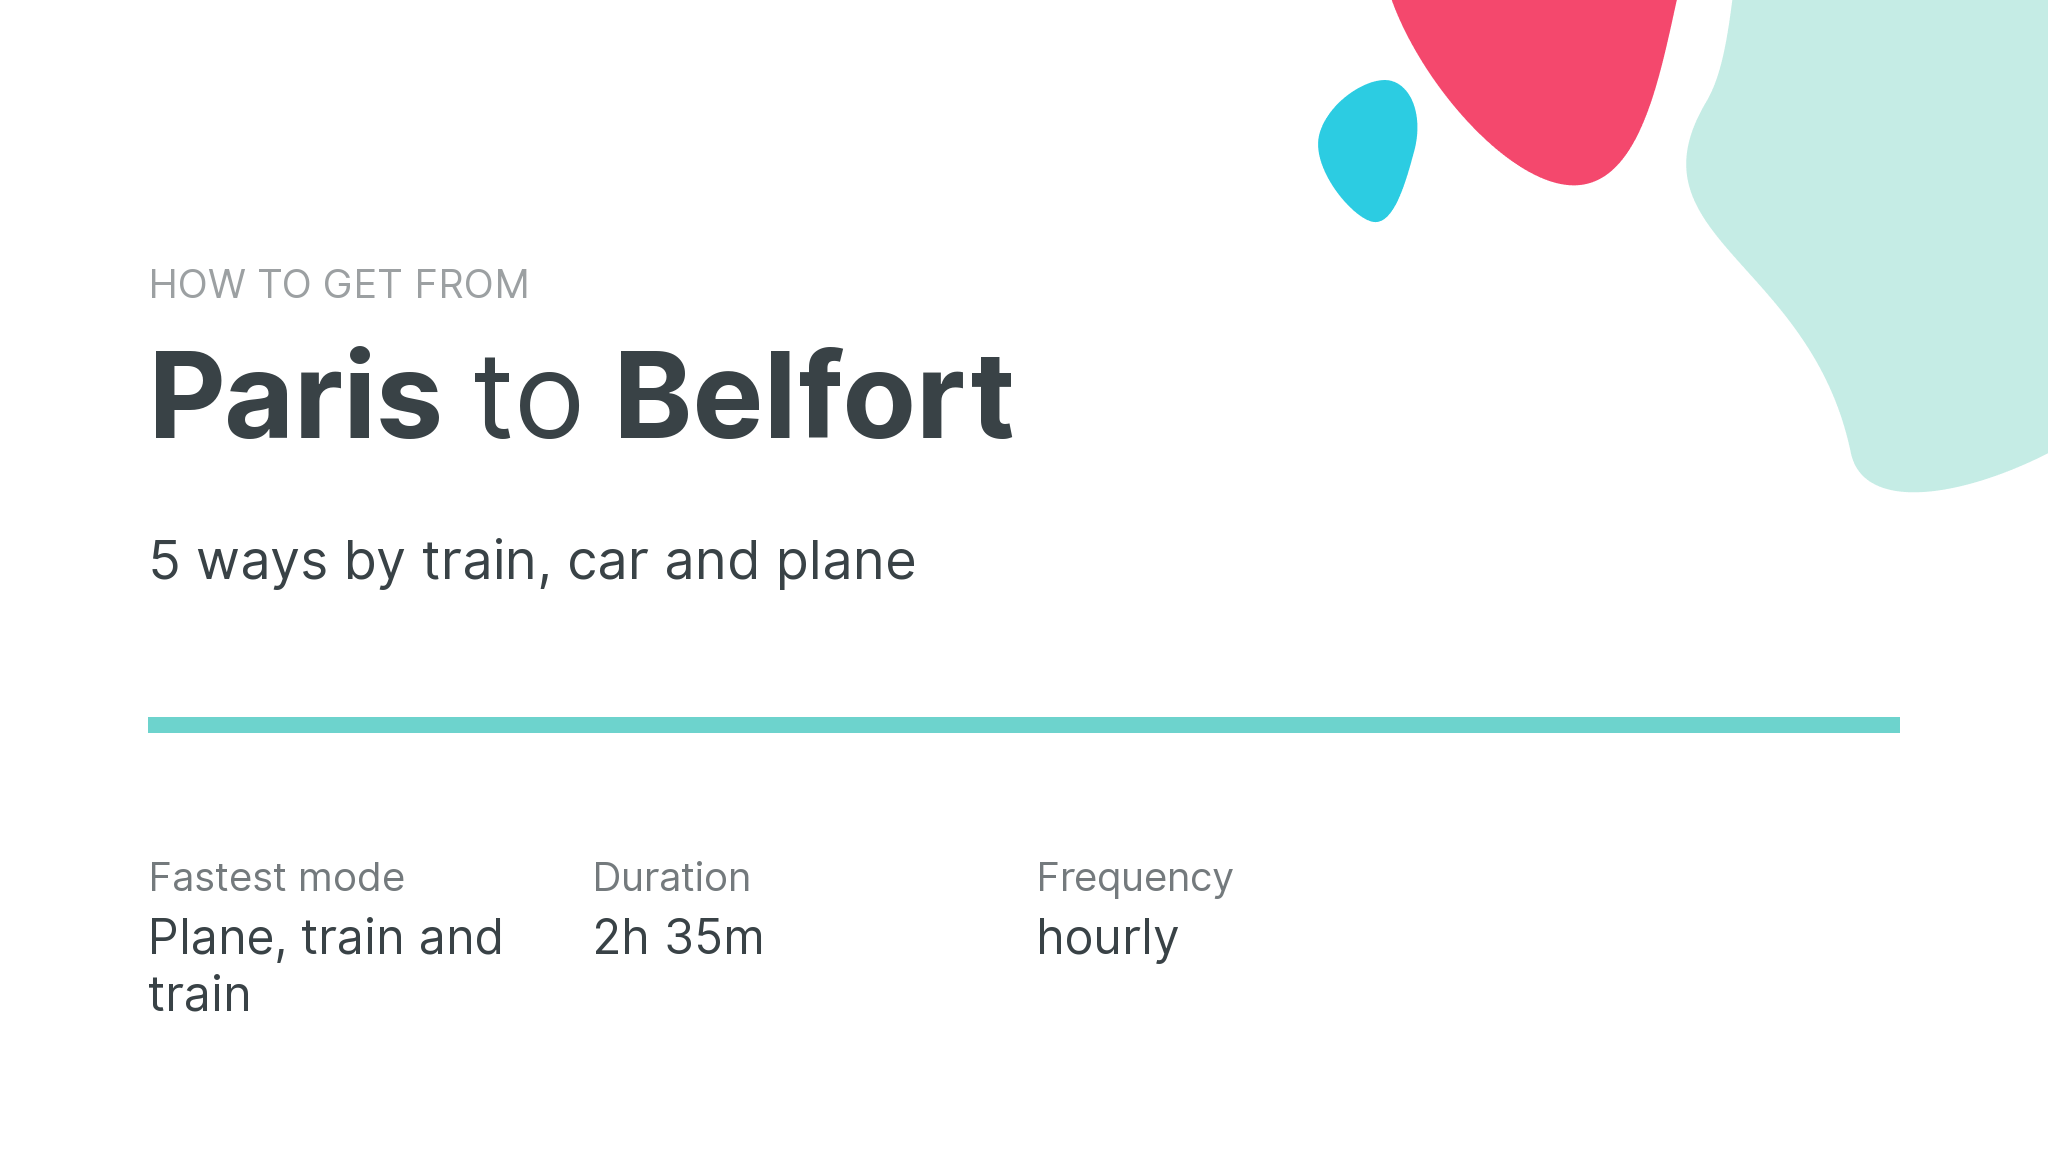 How do I get from Paris to Belfort